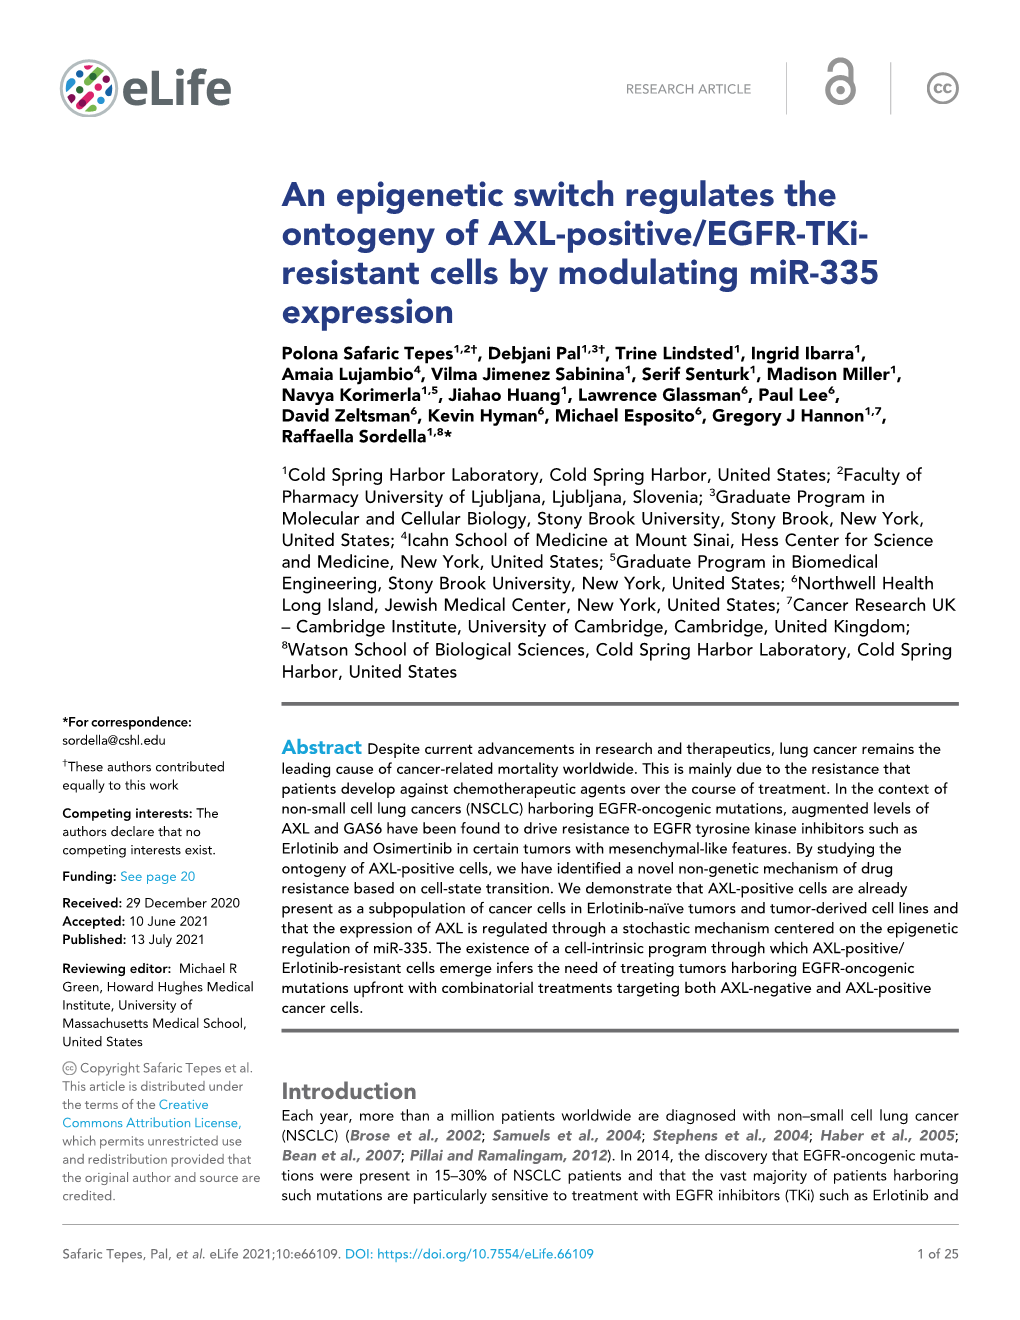 An Epigenetic Switch Regulates the Ontogeny of AXL-Positive/EGFR-Tki